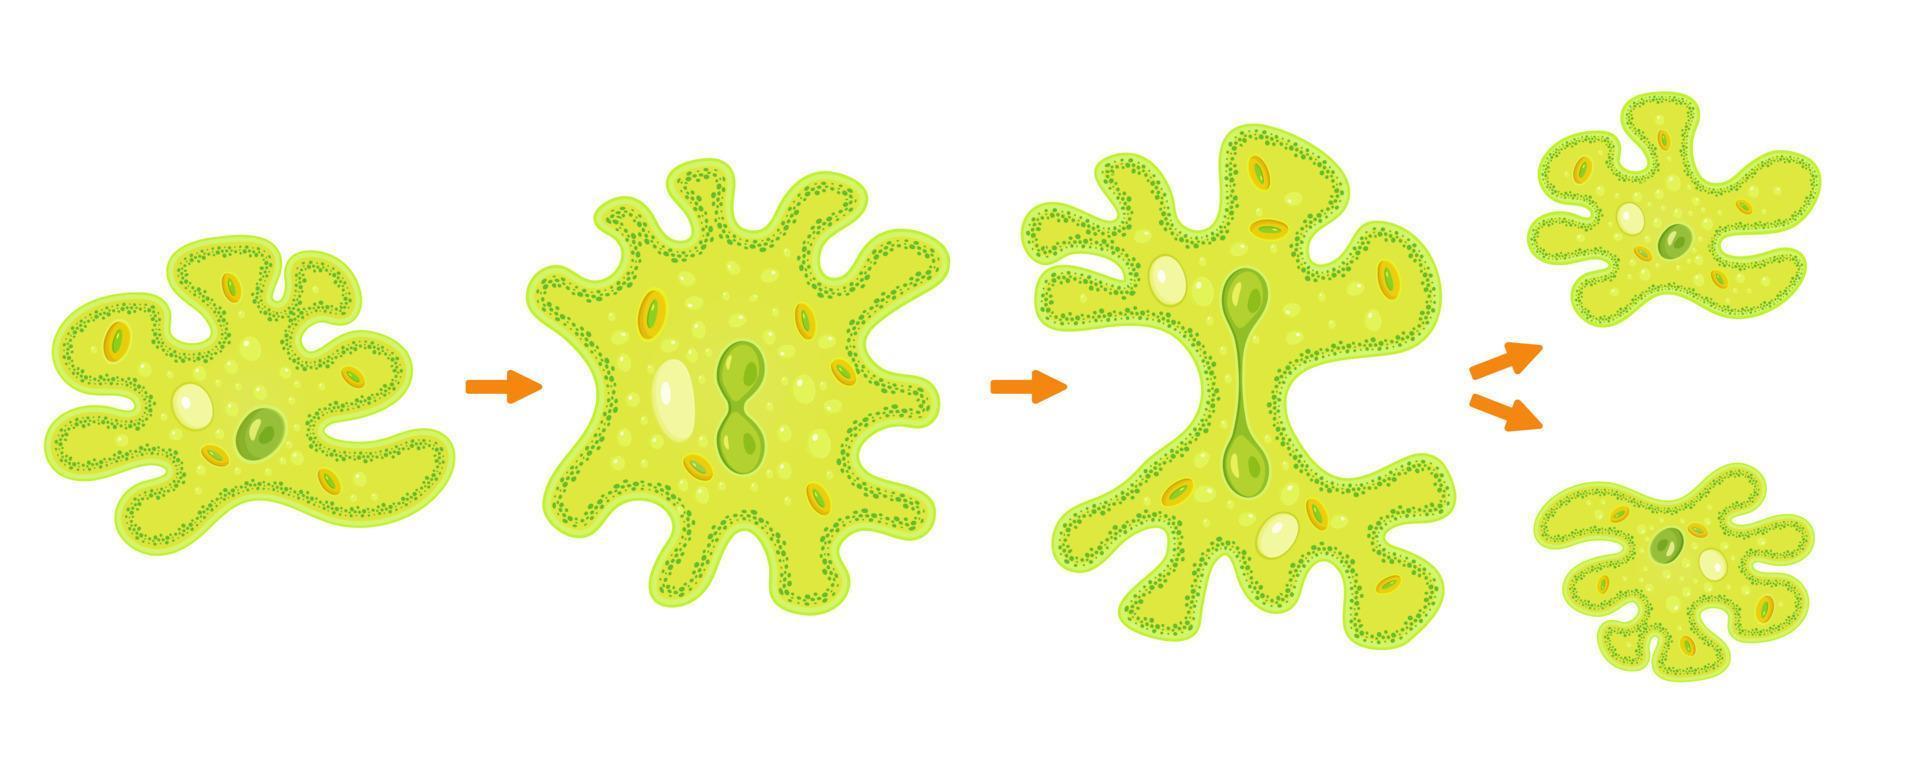 infografía de fisión binaria de ameba. reproducción de bacterias más simples. formación de organismos unicelulares. vector